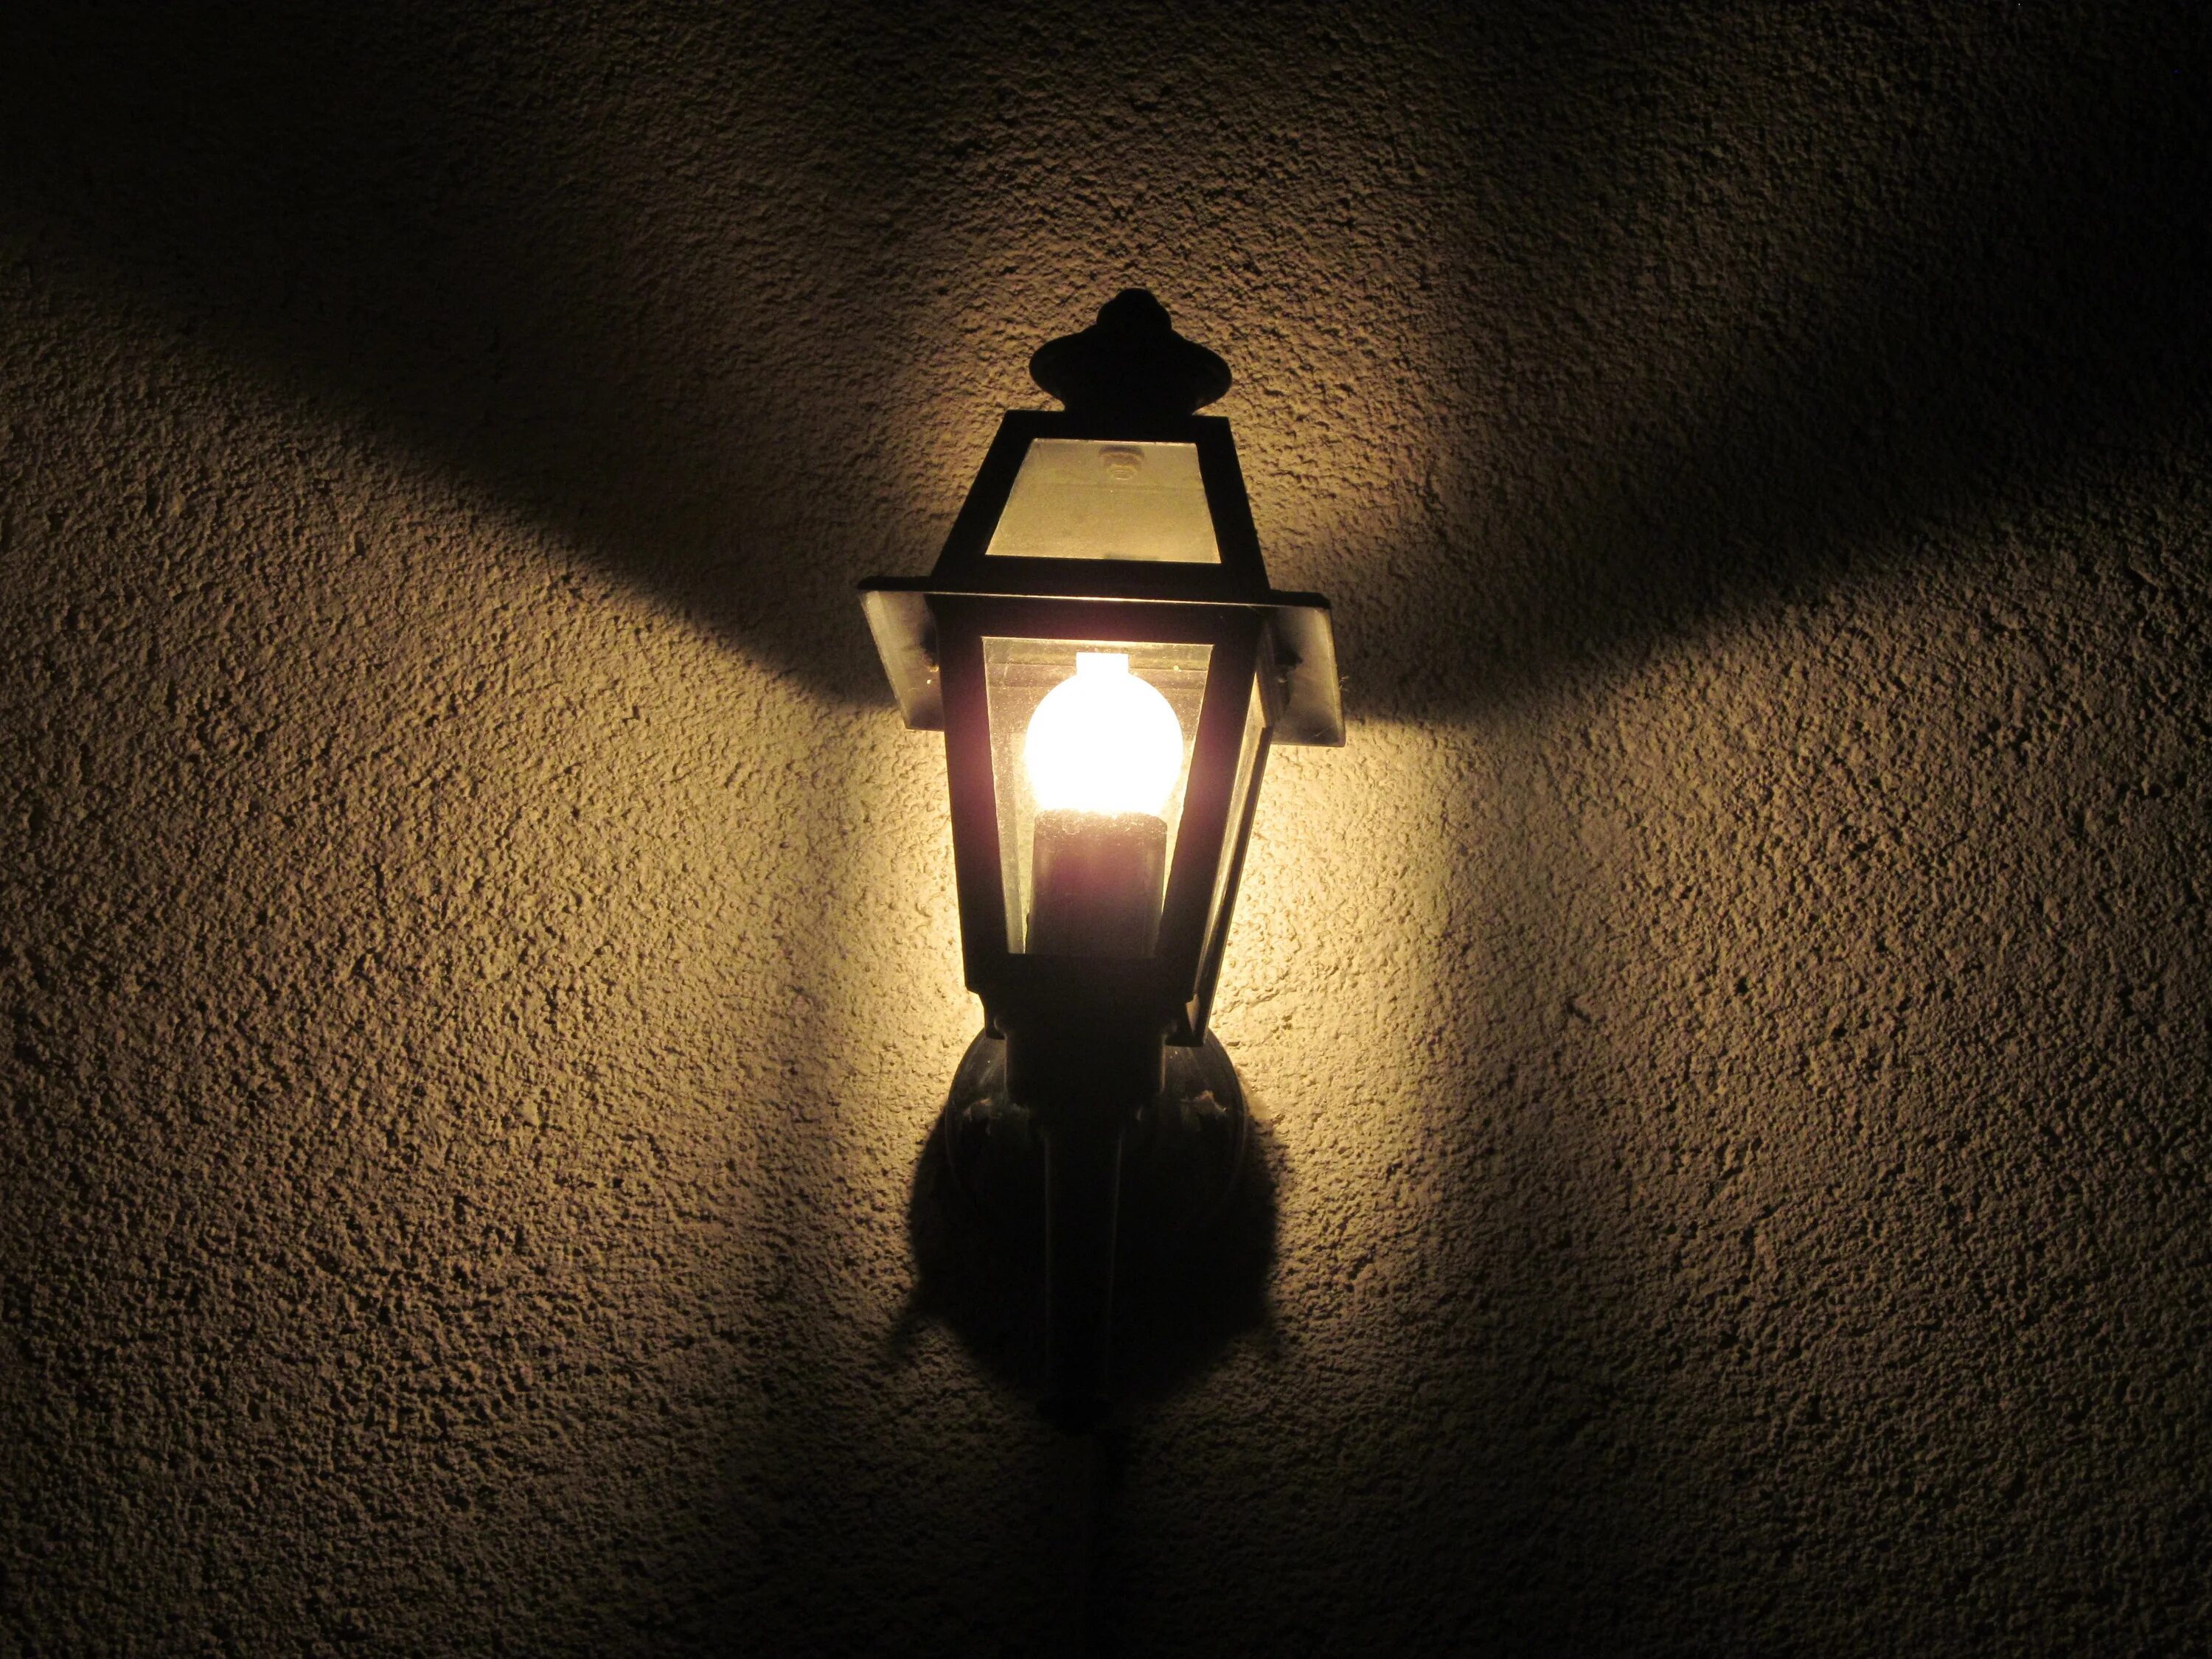 Фонарь в темноте. Лампа в темноте. Уличный фонарь в темноте. Свет фонаря. Темный свет фонарей